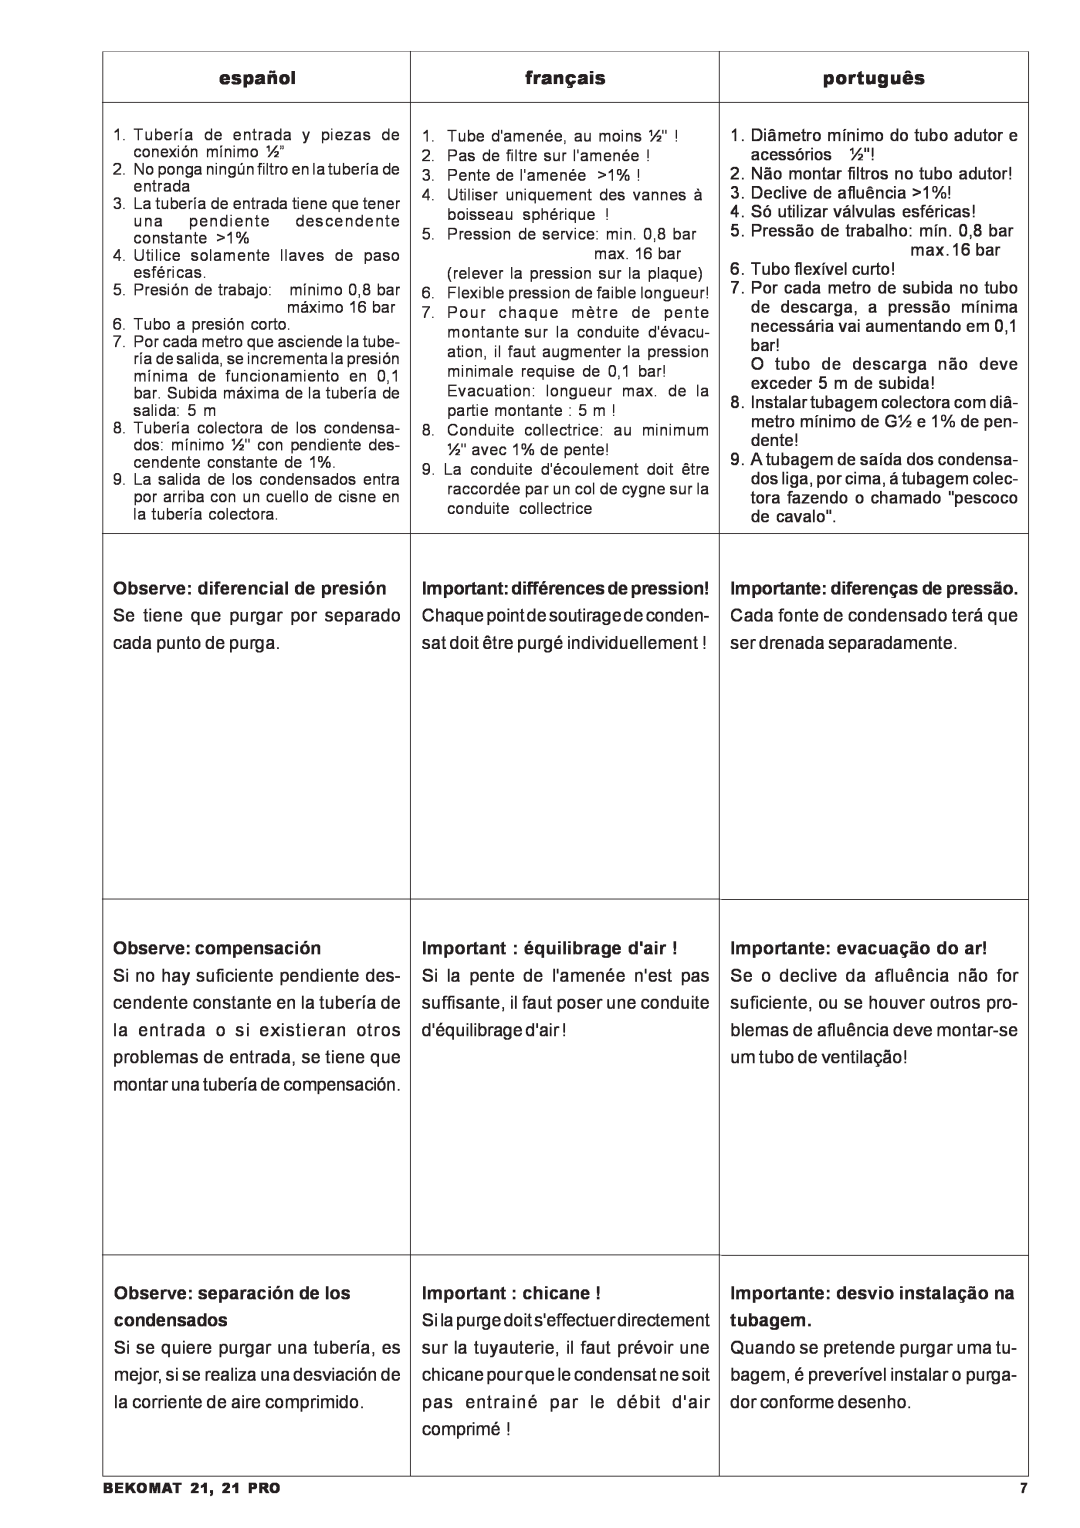 Leupold 21 PRO manual español 